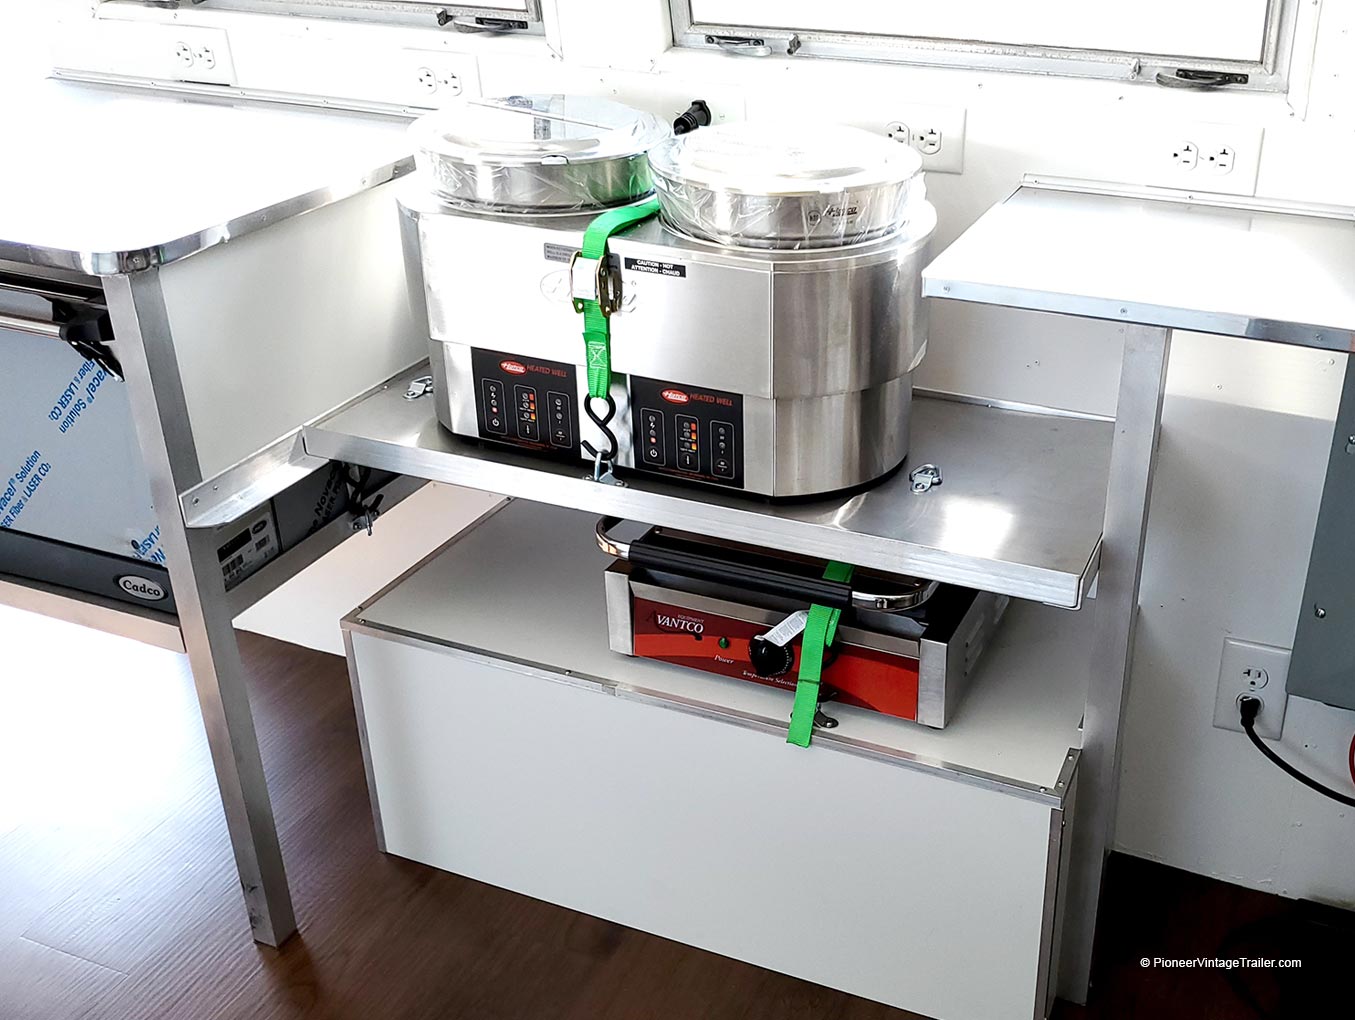 kitchen equipment in Airstream food trailer